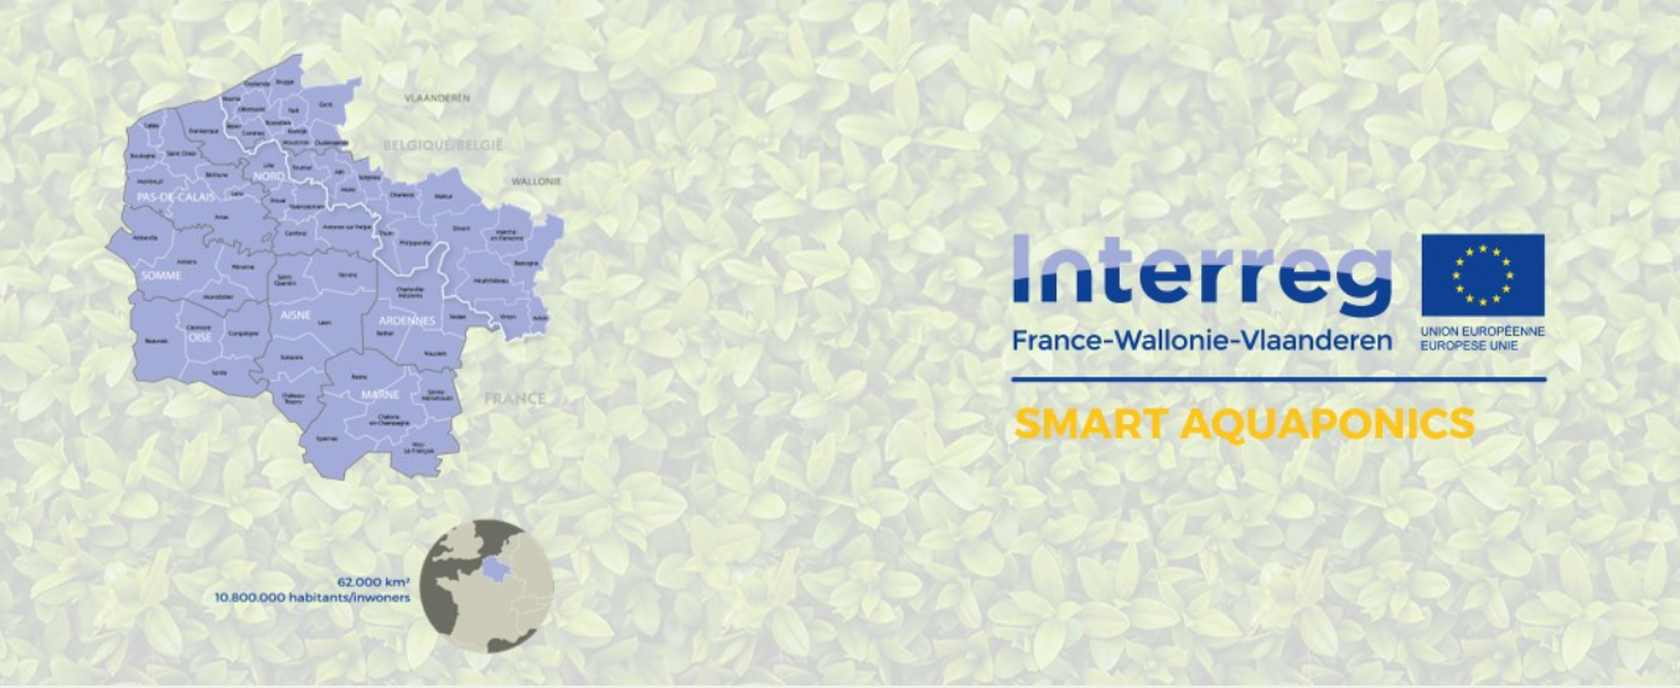 Smart Aquaponics Interreg logo